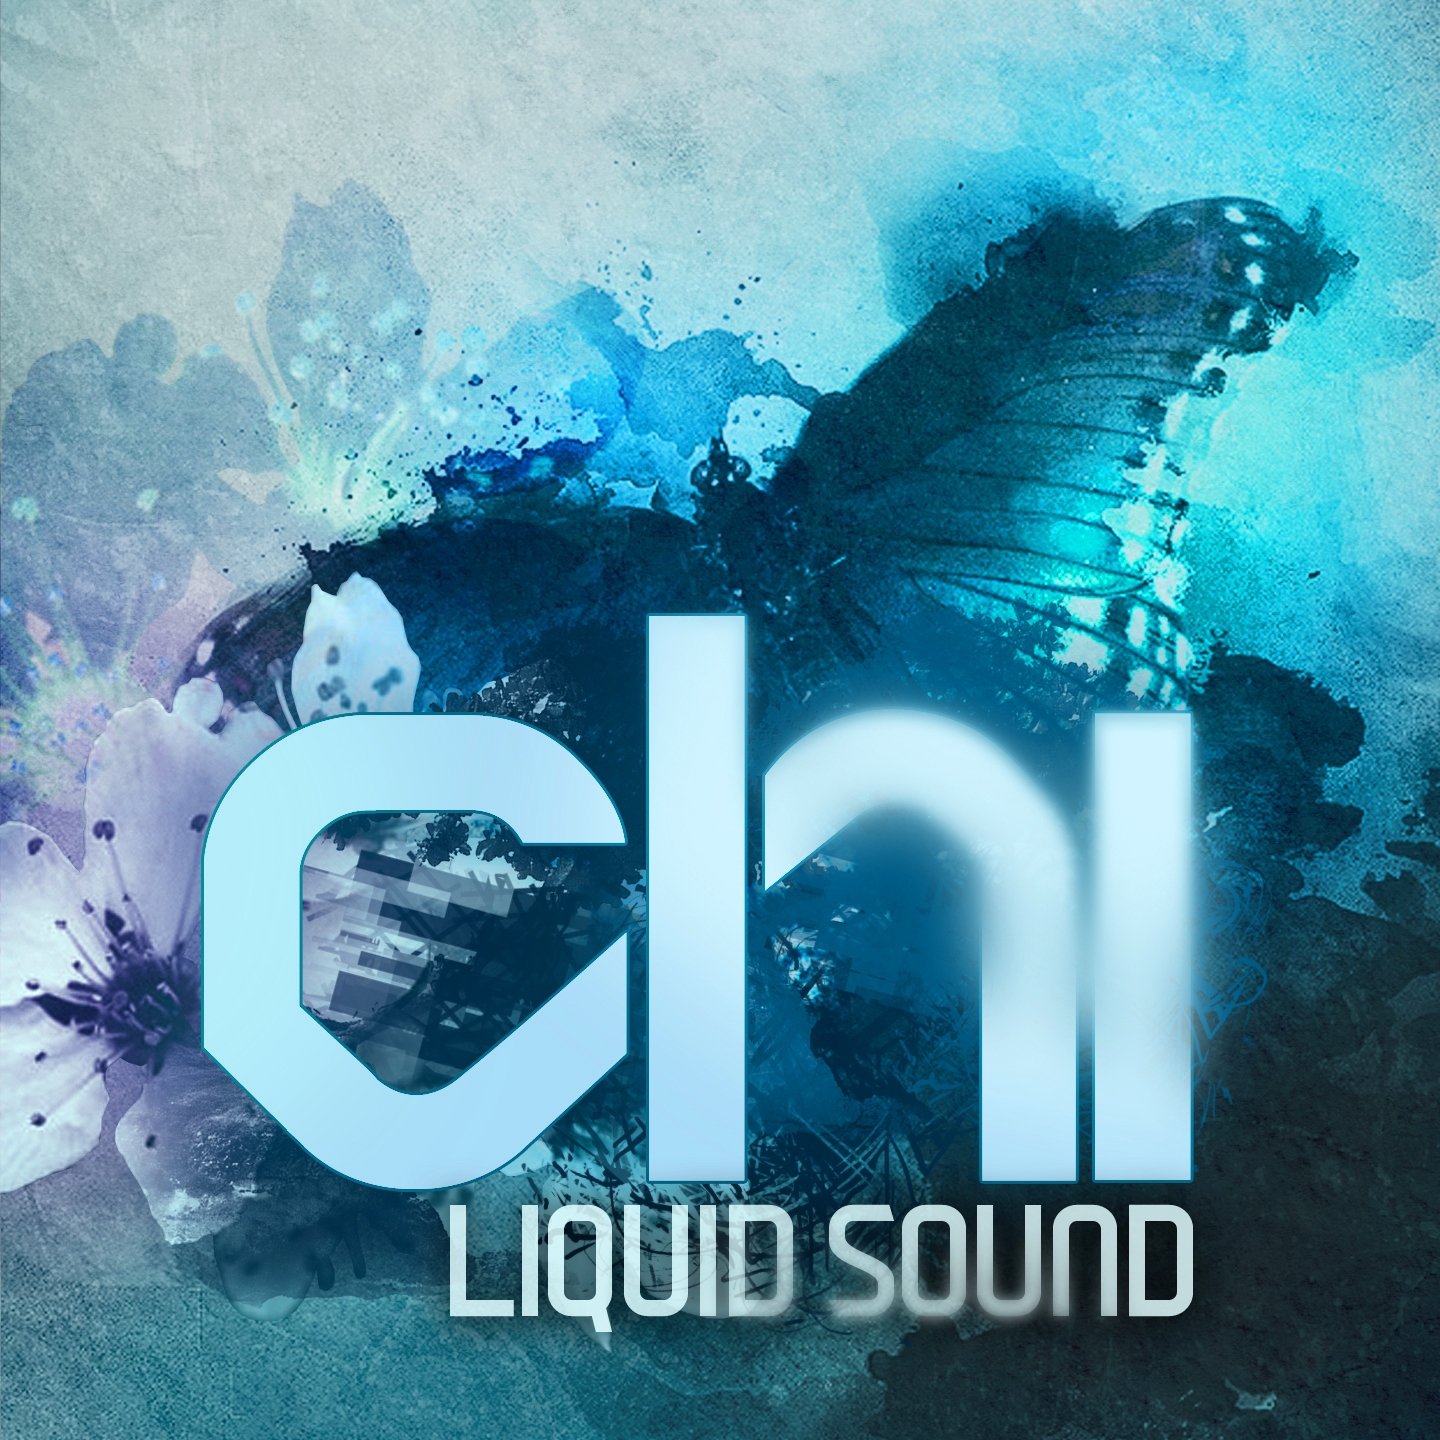 Liquid певец. Ликвид звук. Liquid Sound Company. Crystals обложка. Звук ласт